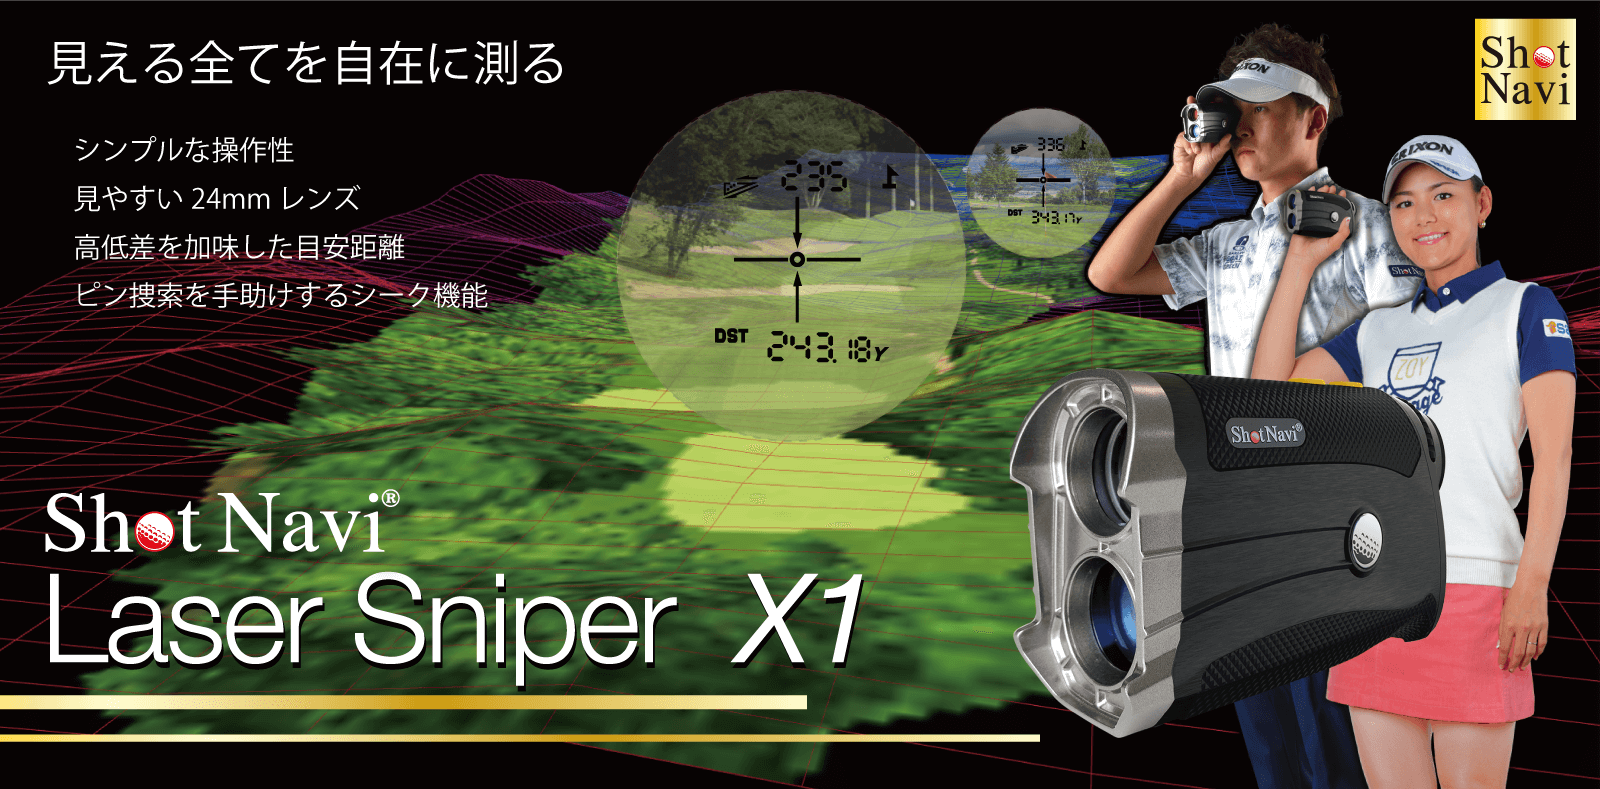 Shot Navi Laser Sniper X1